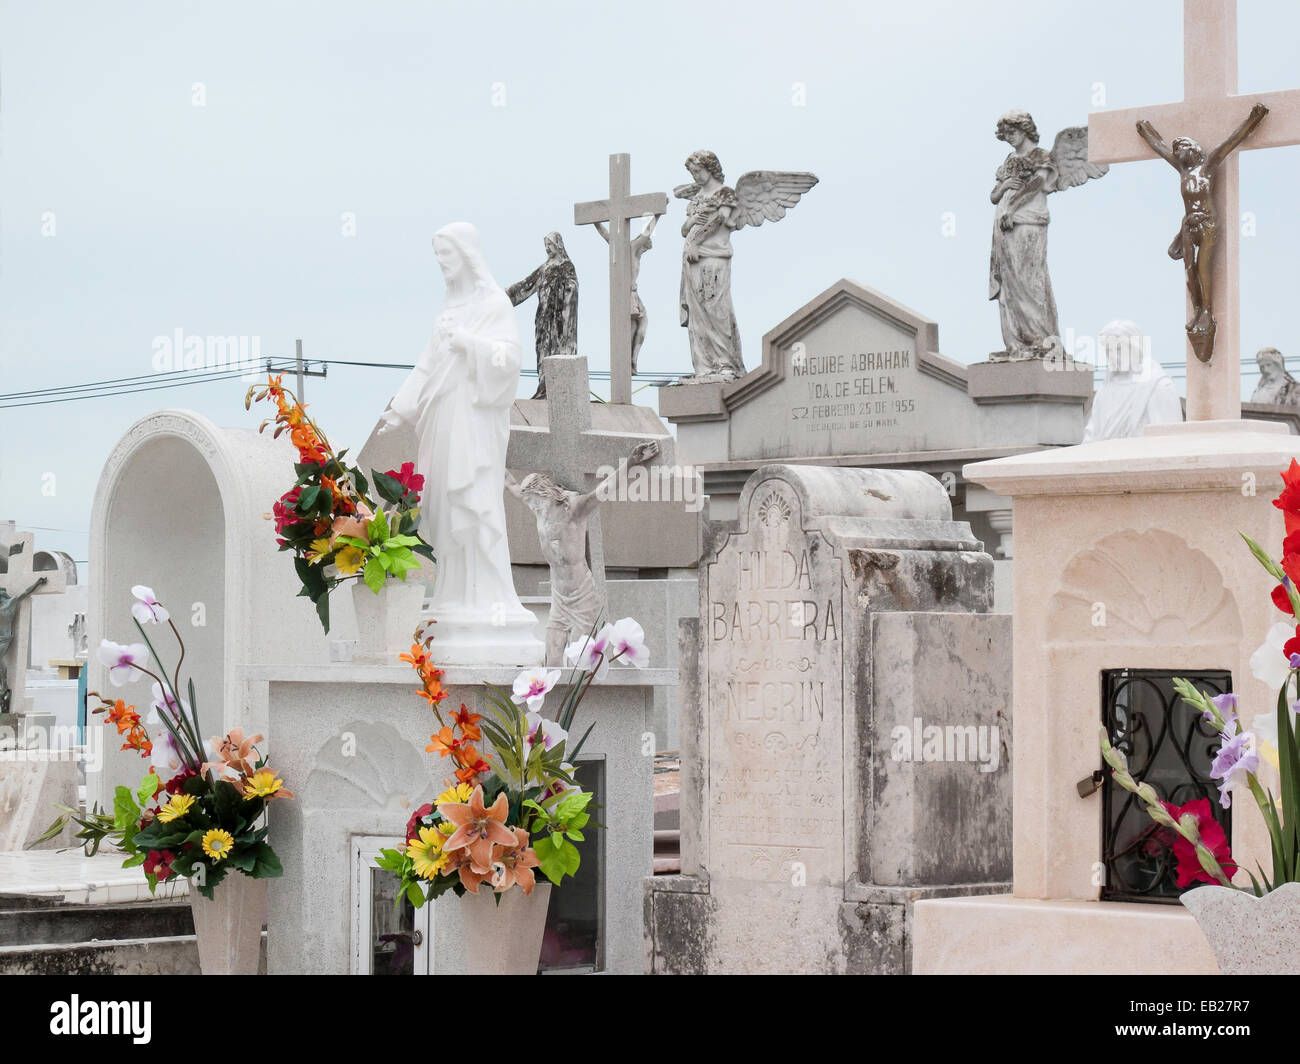 Friedhof Panteon de San Roman Detail aus Marmor Grabsteine mit geschnitzten Kreuzen und Engel mit bunten frischen Blumen geschmückt, Campeche, Mexiko. Stockfoto